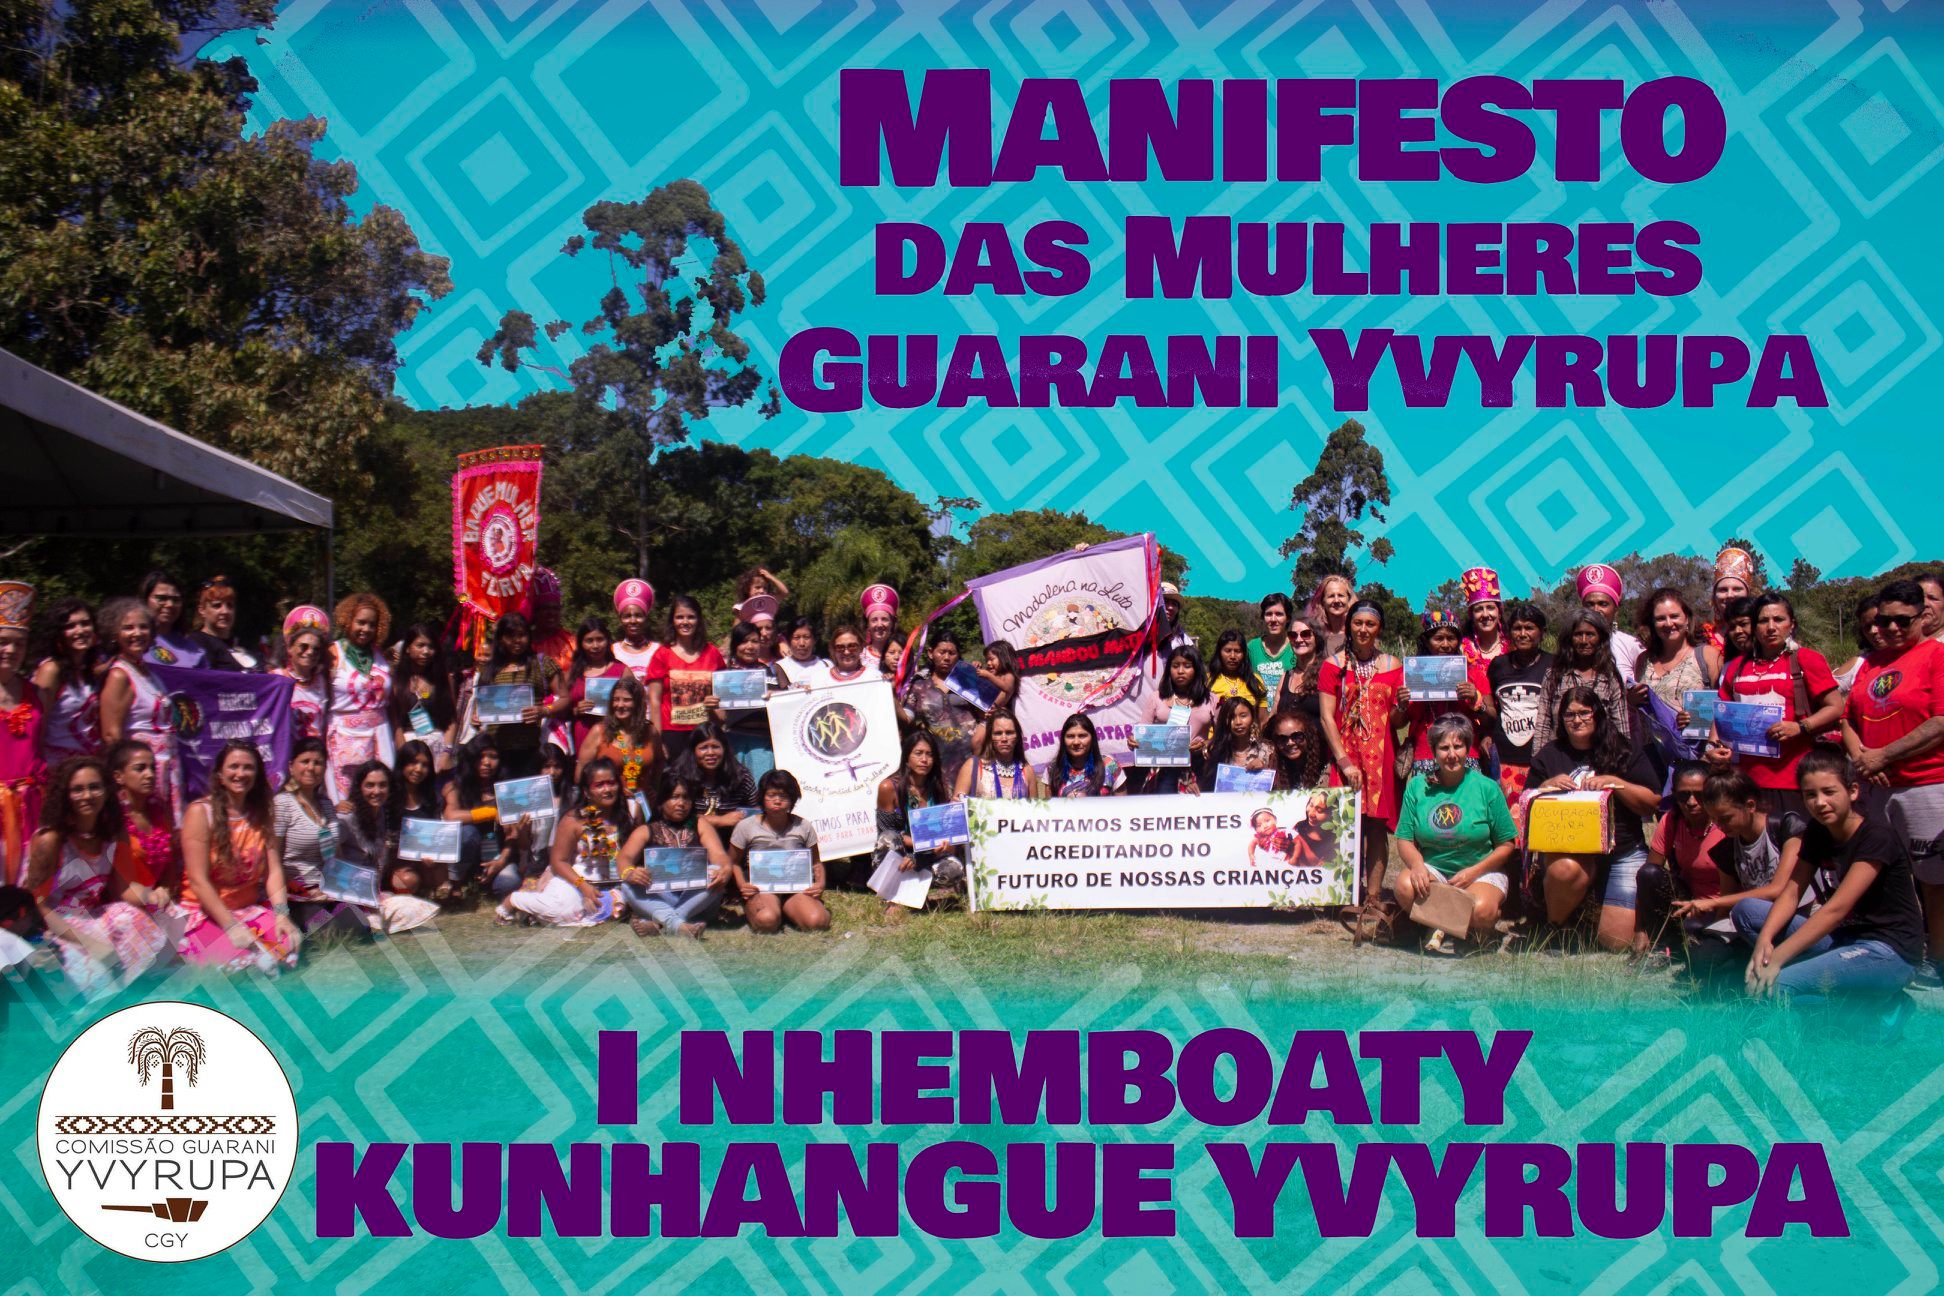 Manifesto das Mulheres Guarani Yvyrupa